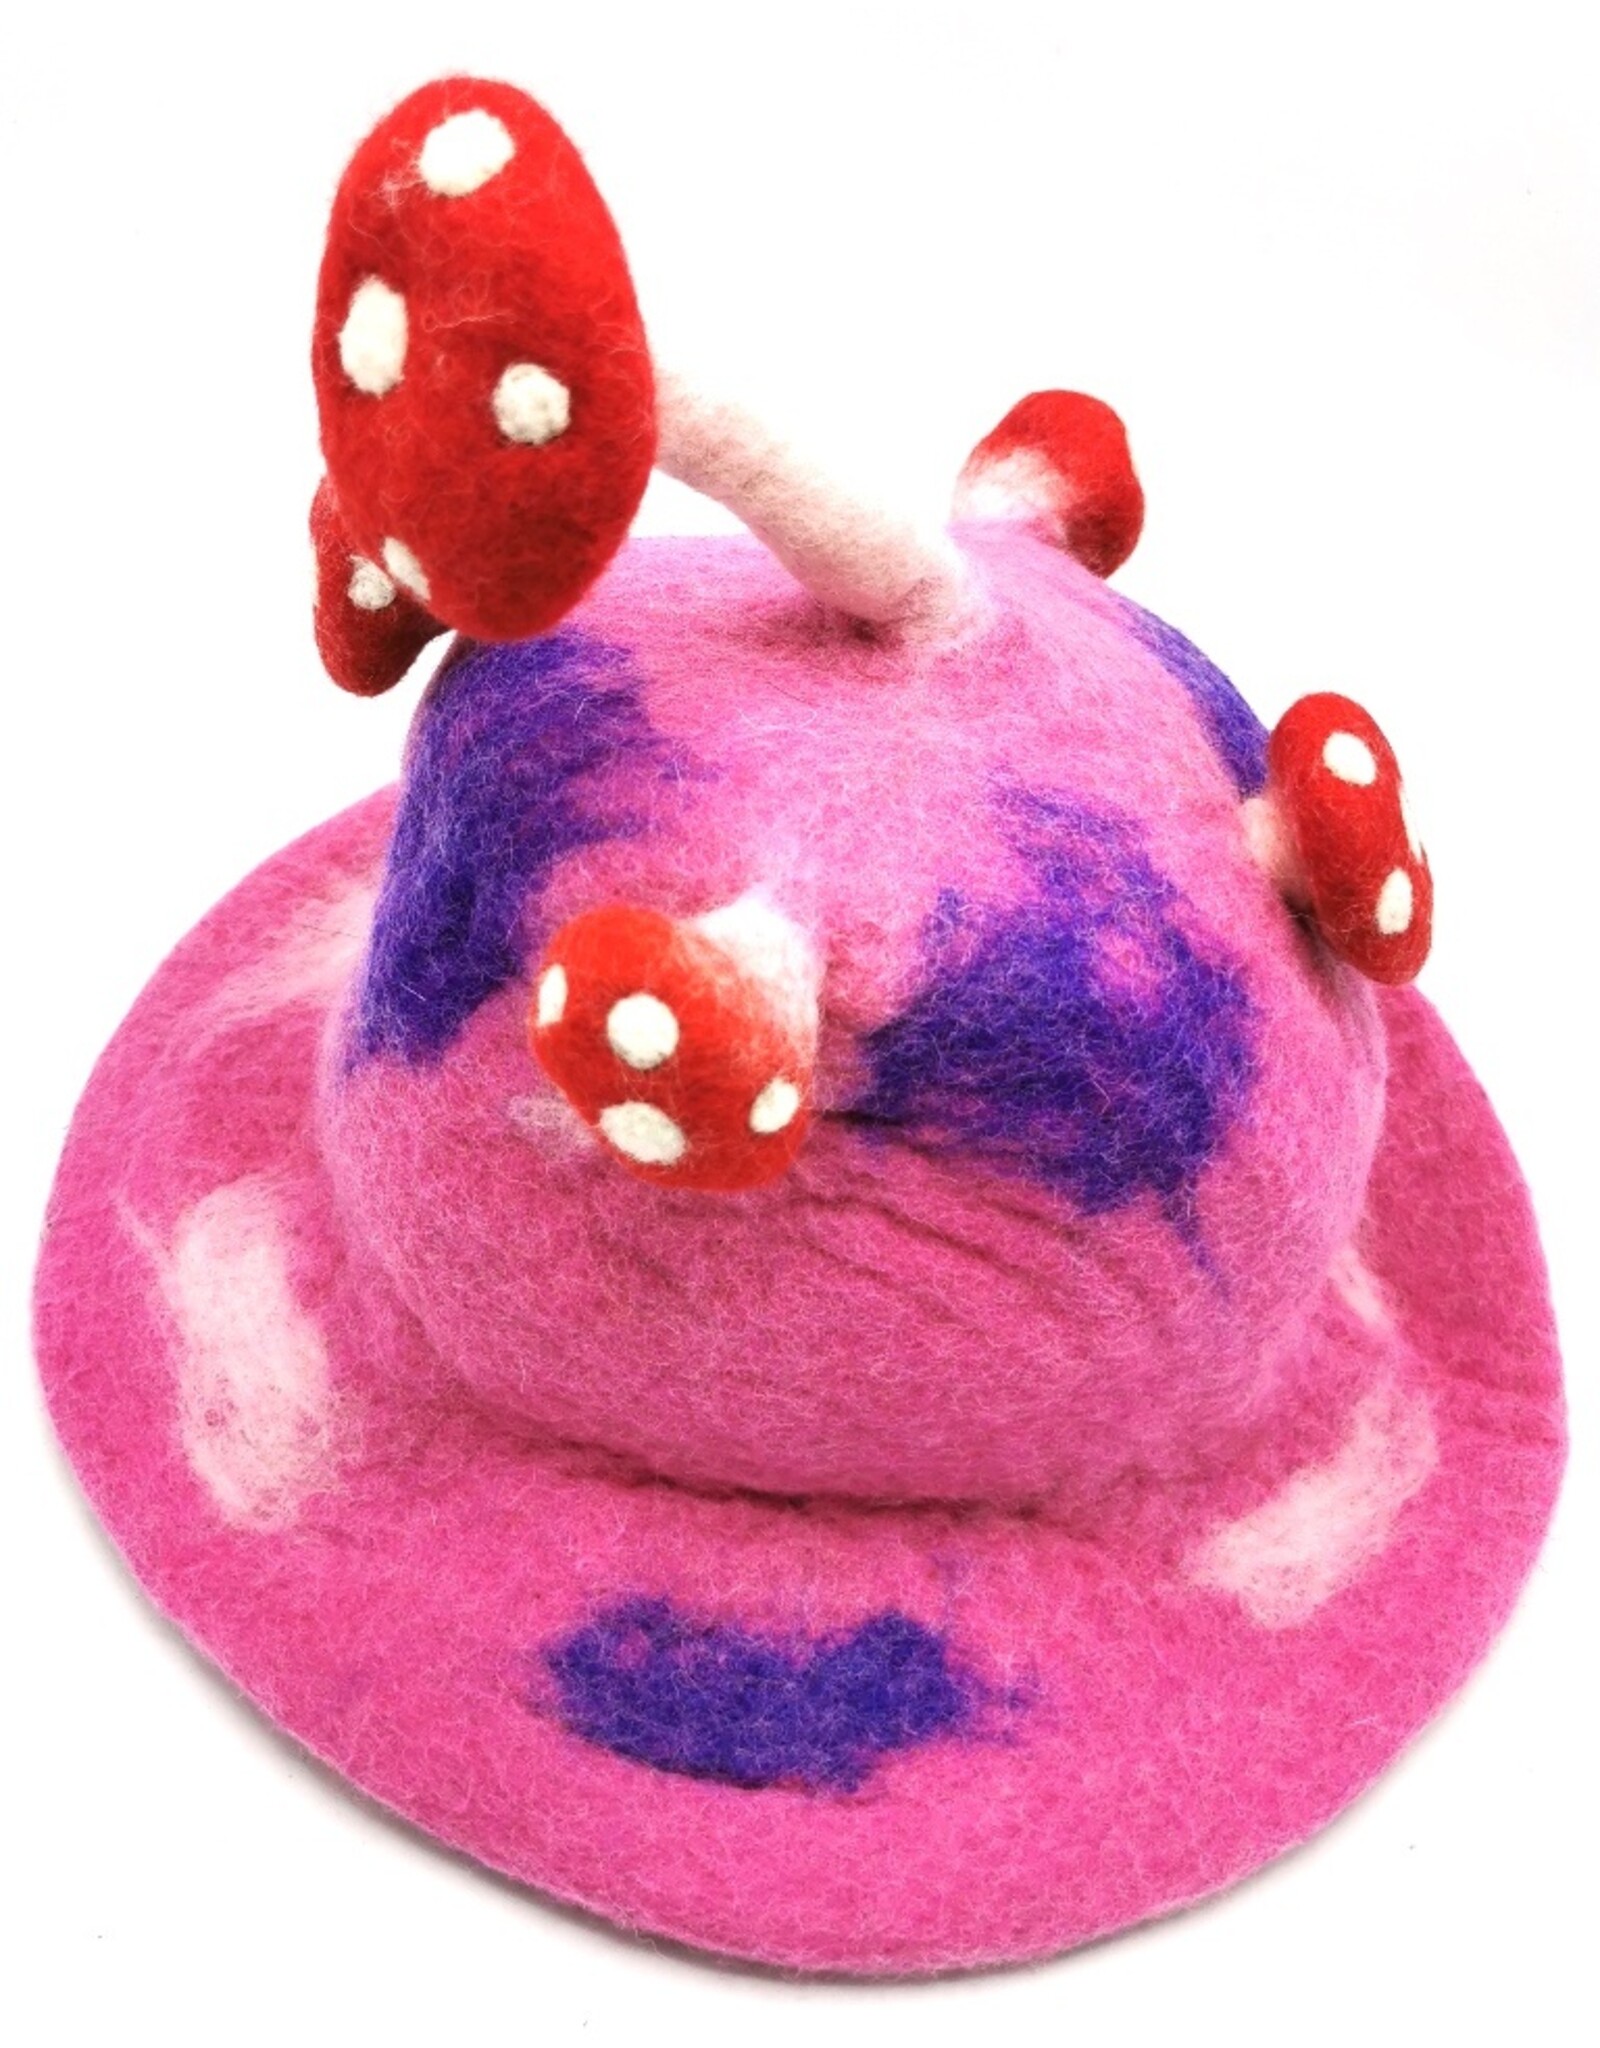 Trukado Miscellaneous - Felt hat "Mushroom Fly Swamp" pink-red